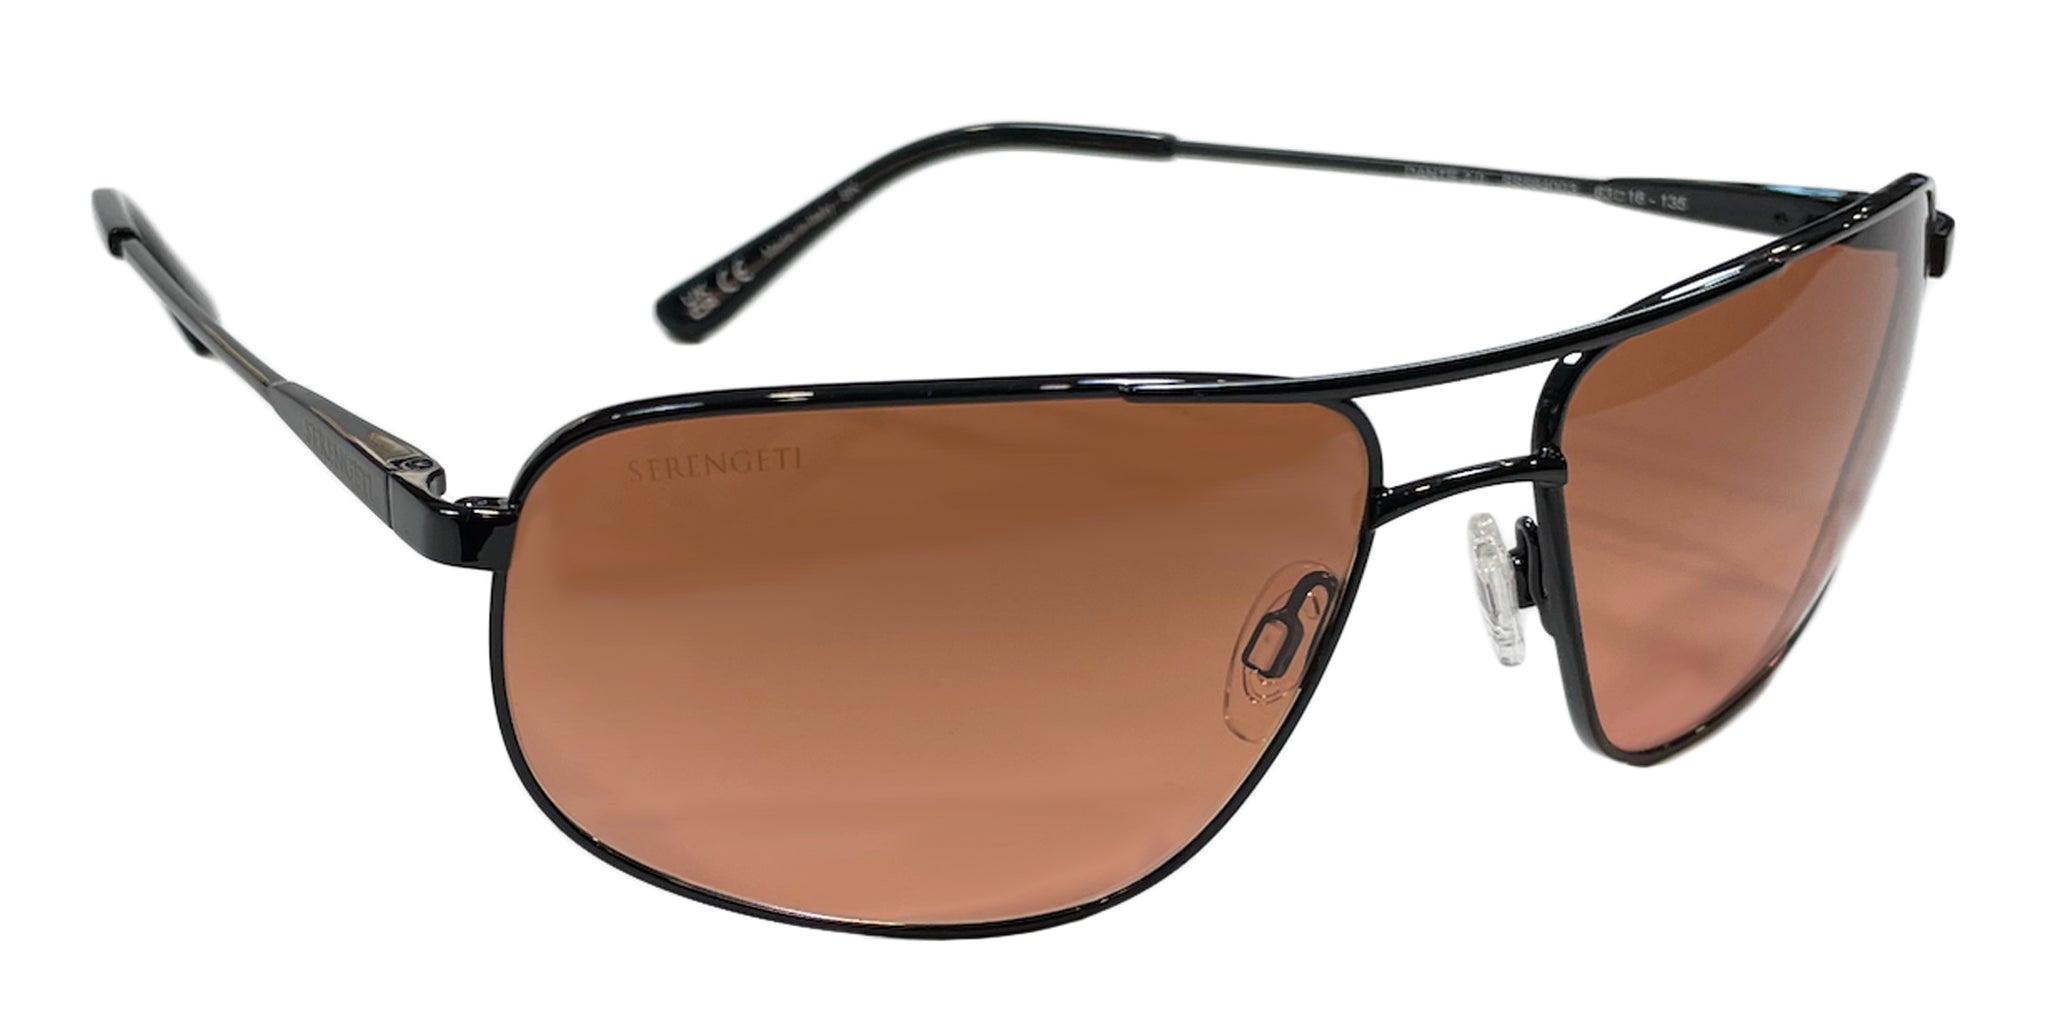 Serengeti Sunglasses for Pilots, Non-Polarized